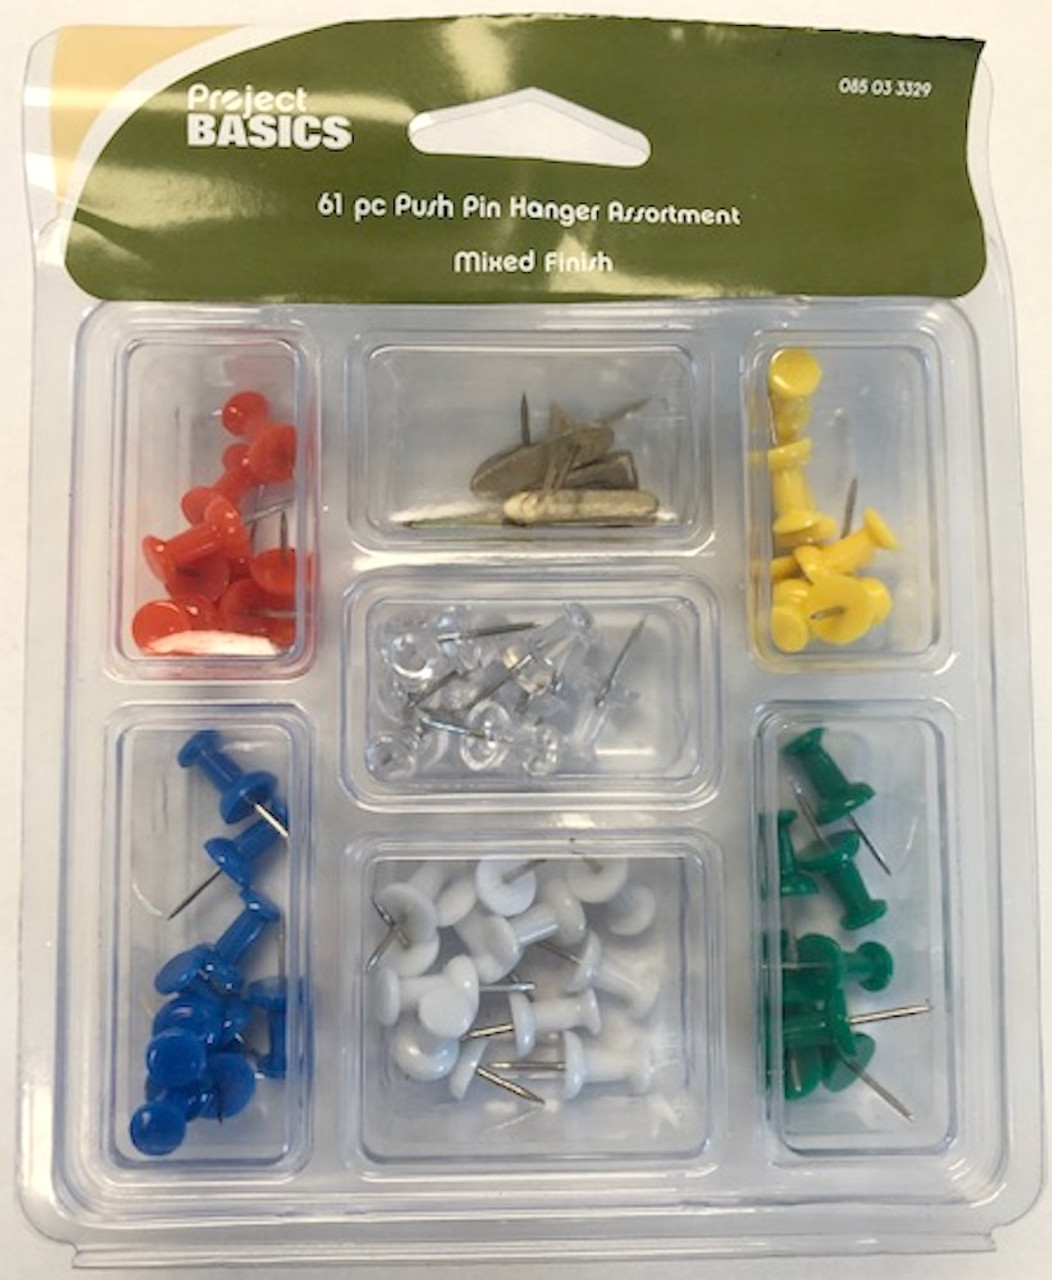 Project Basics 085-03-3329 61 Piece Push Pin Hanger Assortment Kit